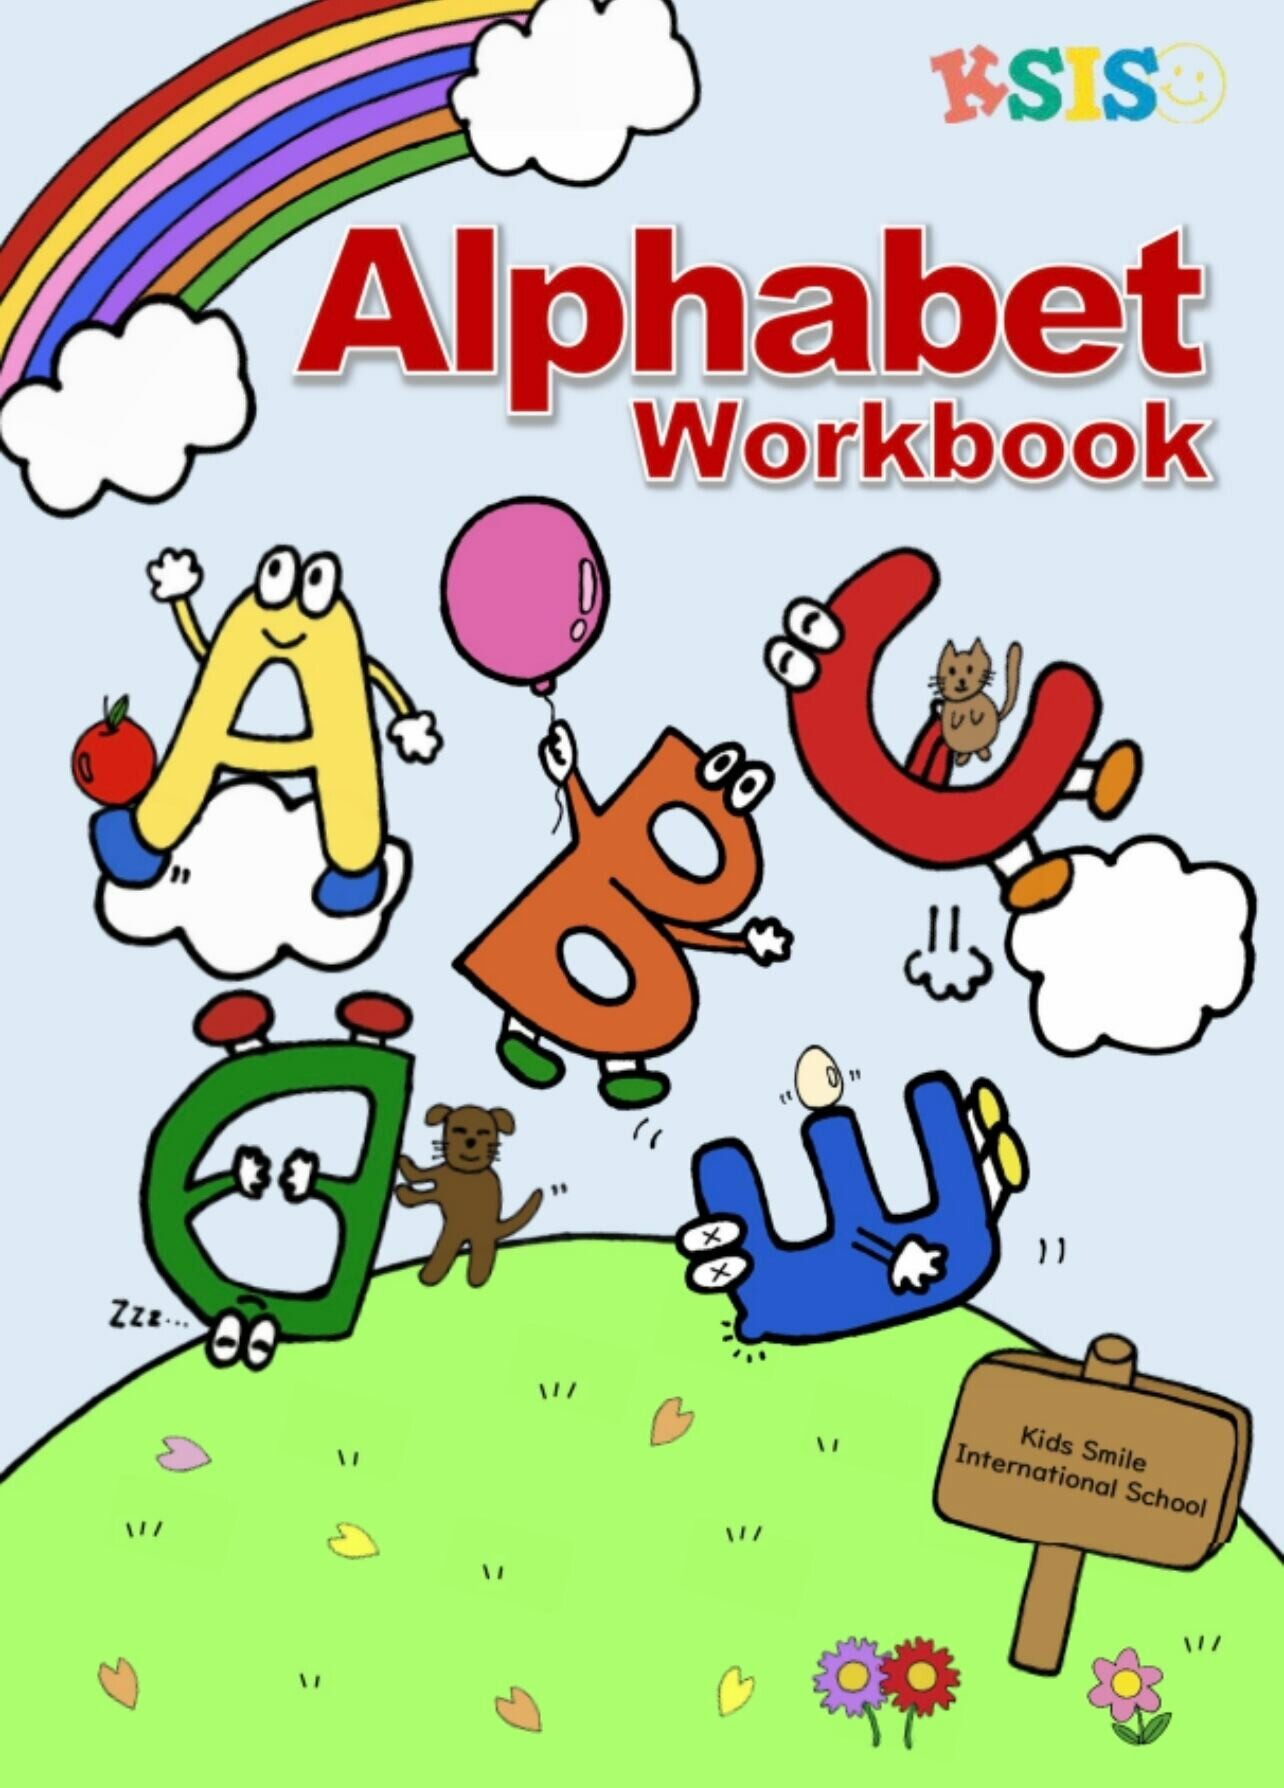 KSIS Alphabet Wookbook アルファベットワークブック